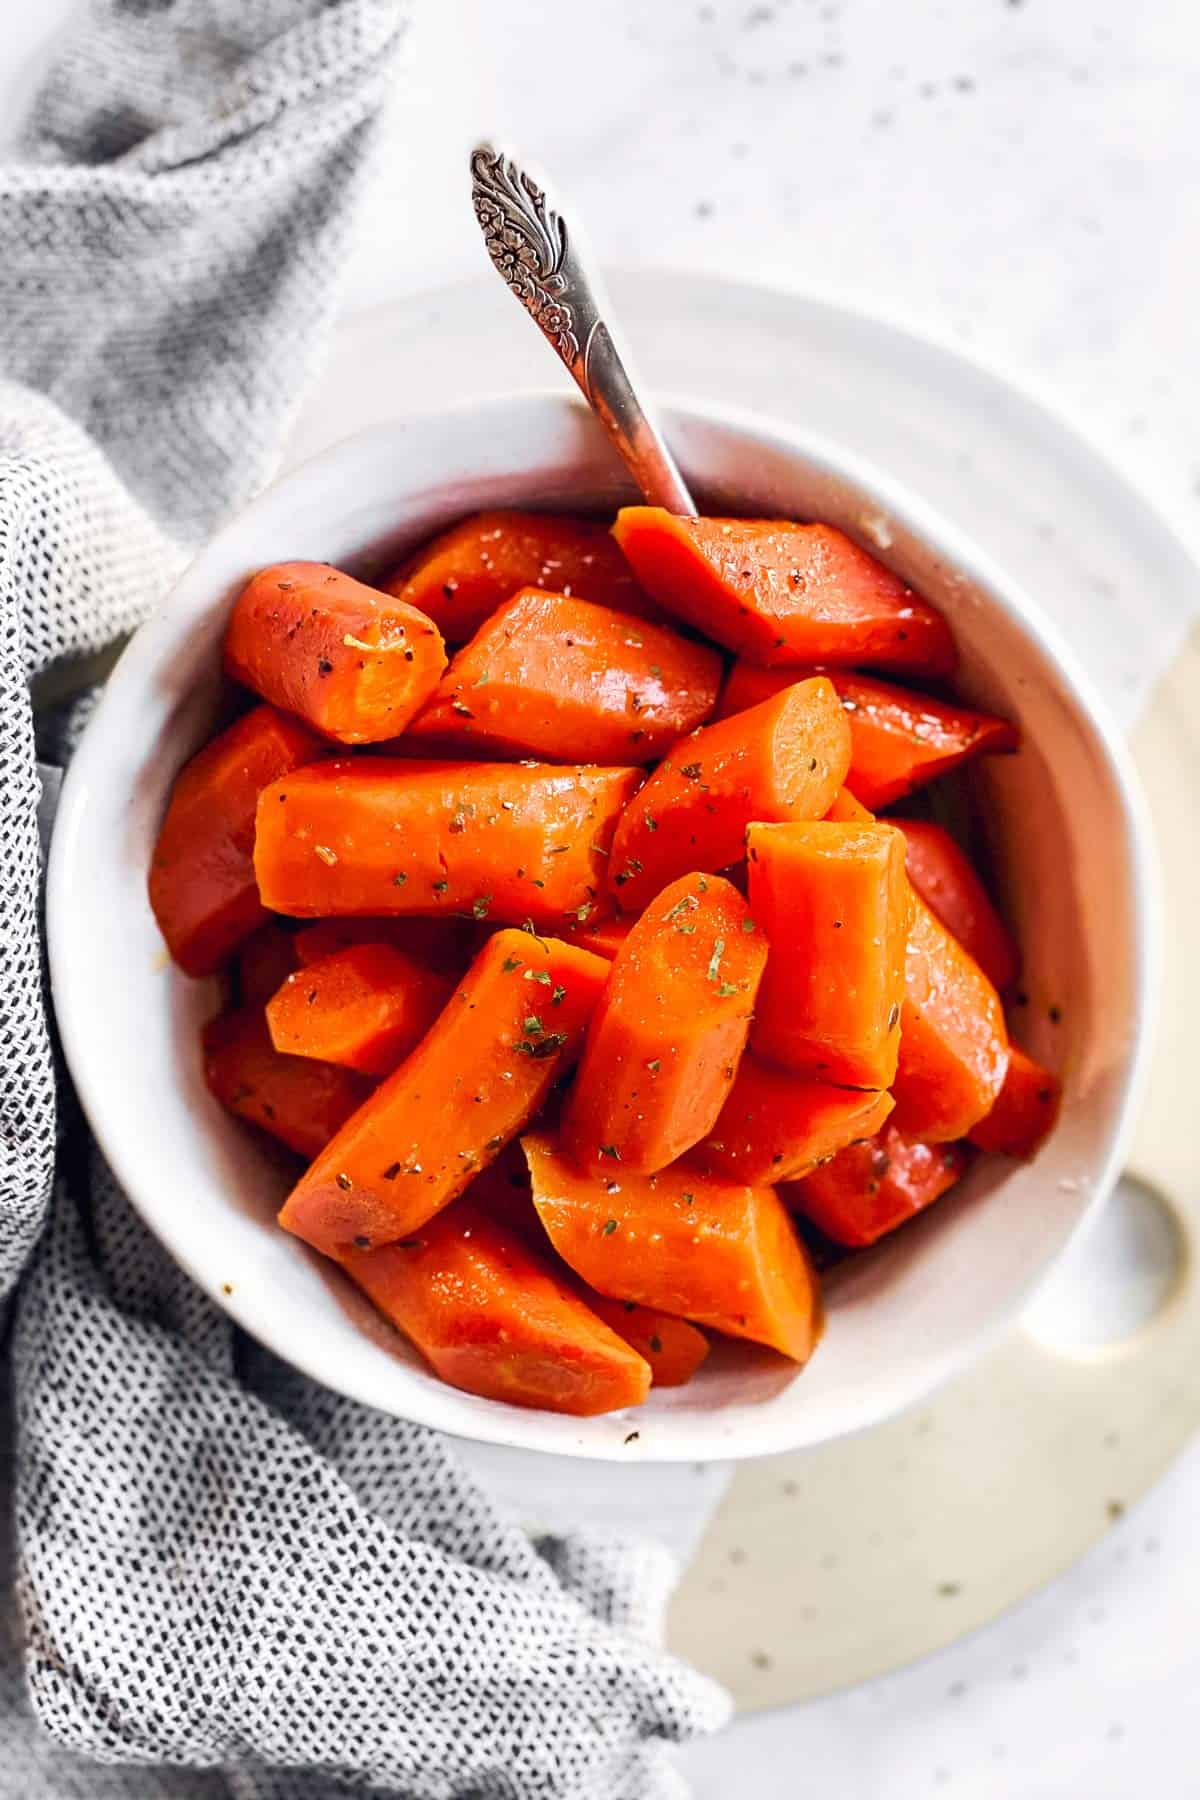 https://www.savorynothings.com/wp-content/uploads/2019/09/crockpot-glazed-carrots-image-3.jpg